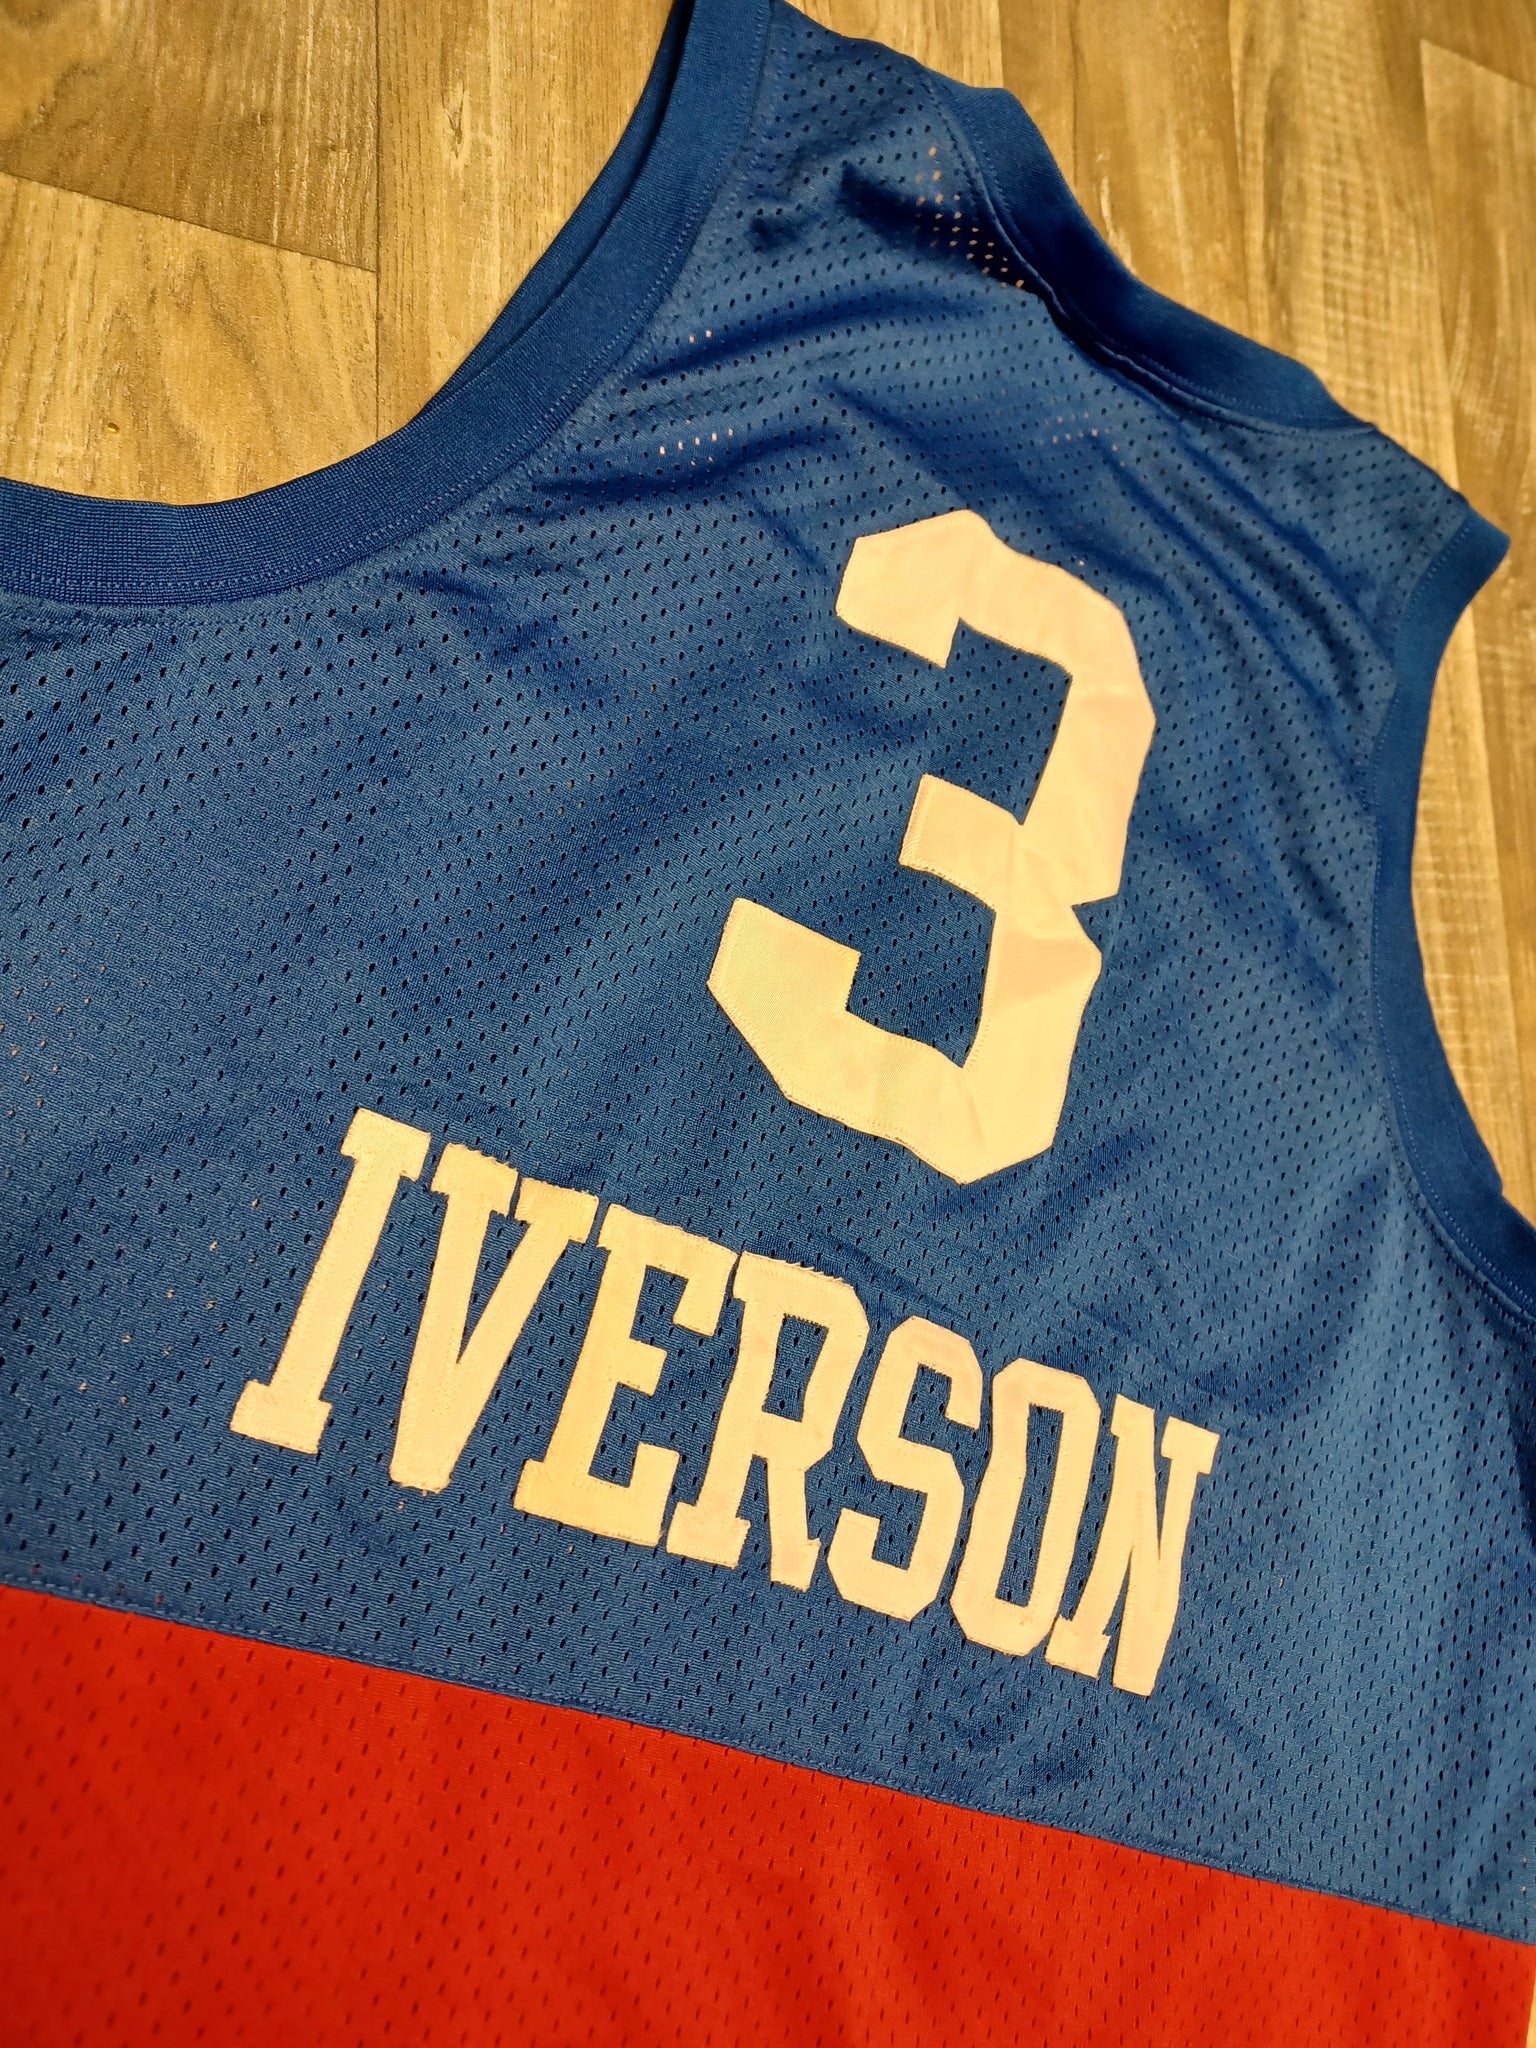 allen iverson blue 76ers jersey